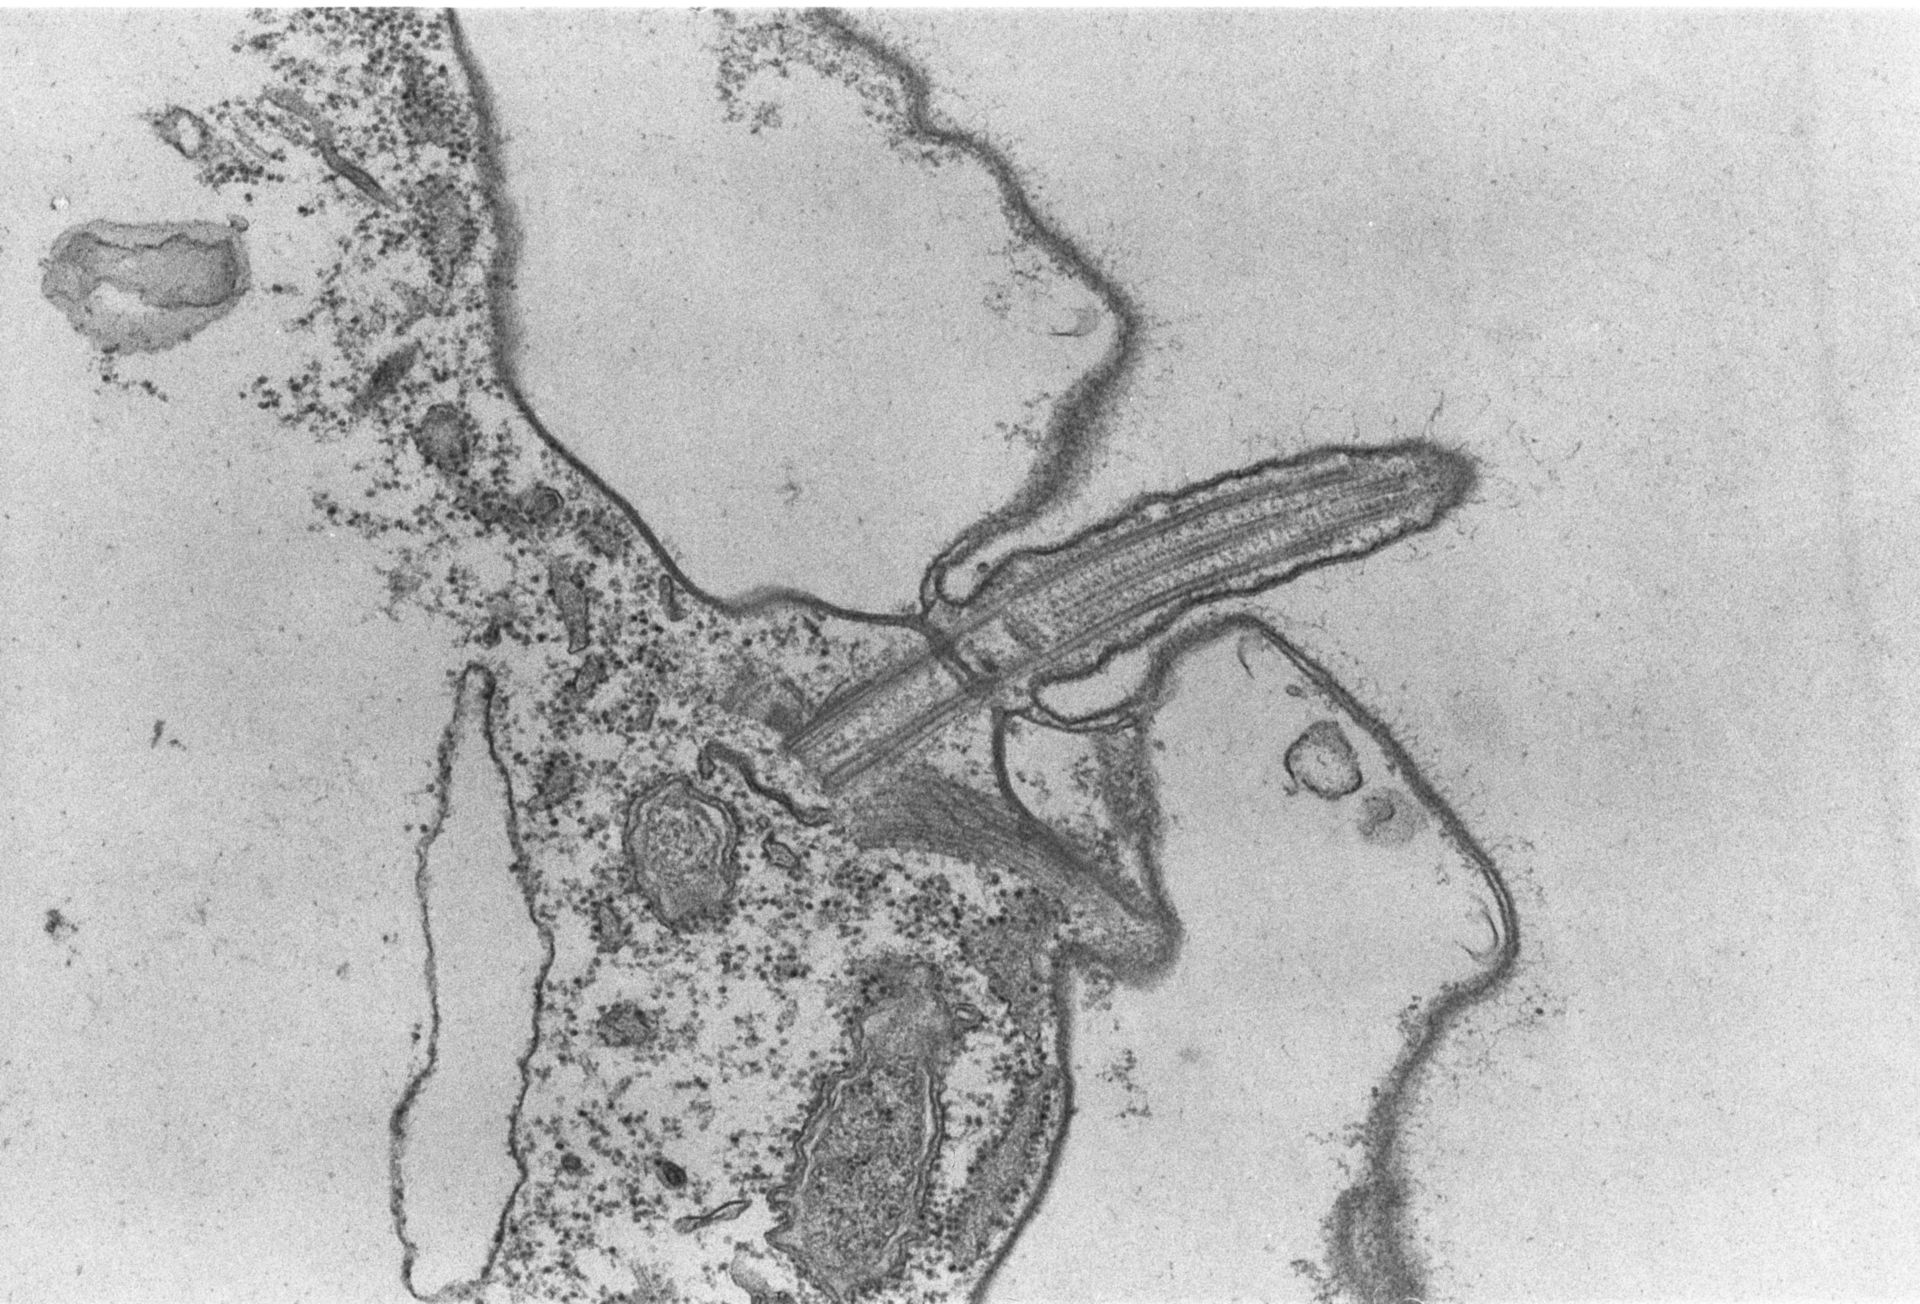 Coleps hirtus (Bacteroid-containing symbiosome) - CIL:2868